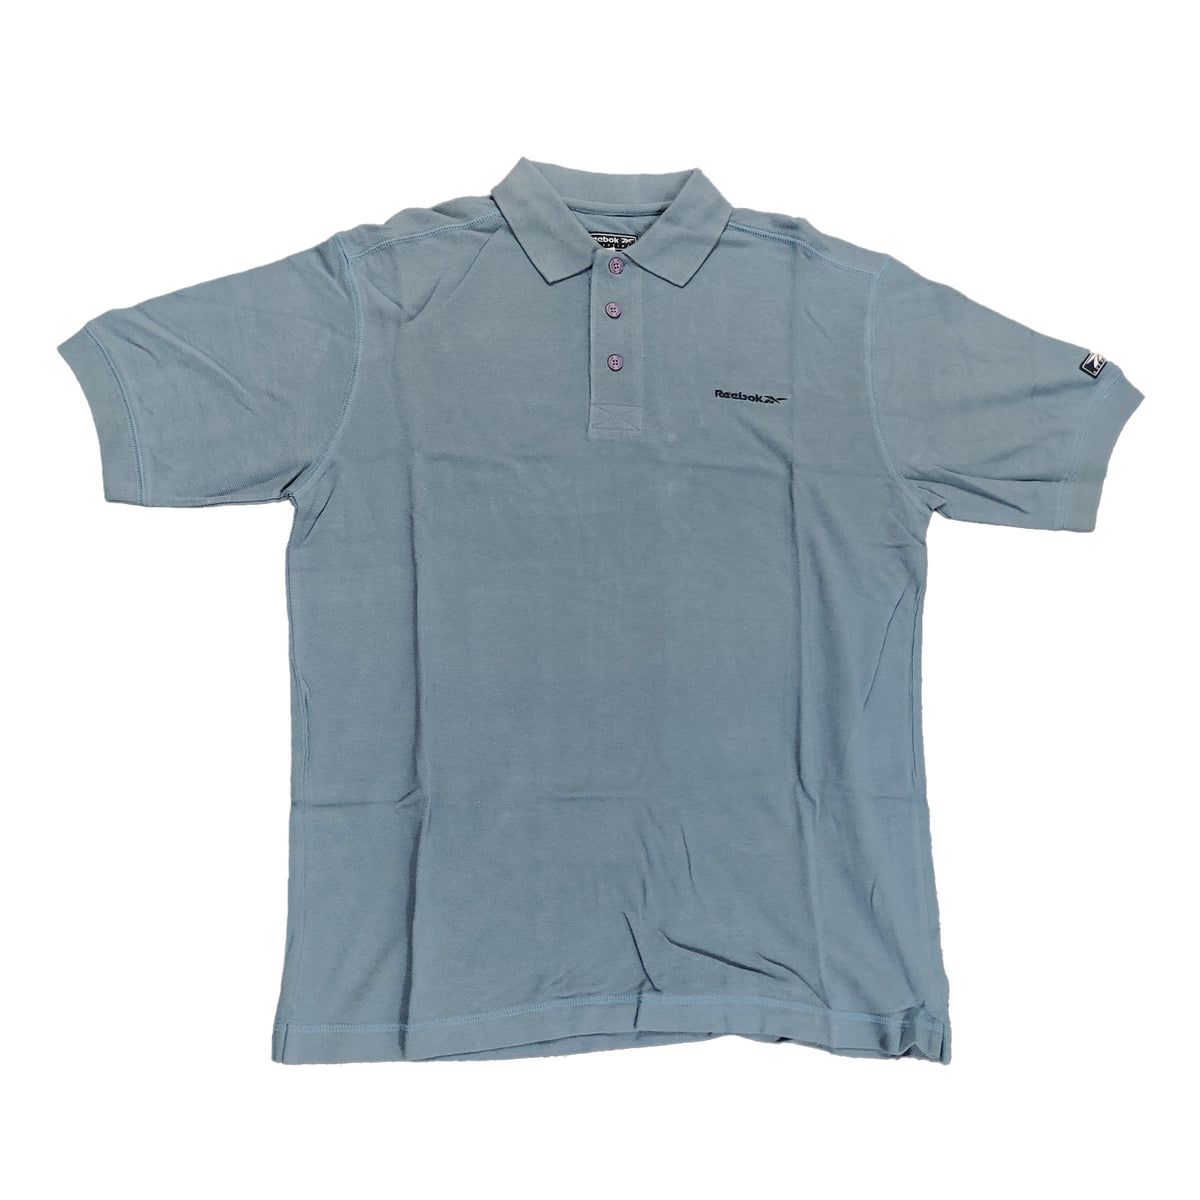 Reebok Mens Clearance Pale Blue Polo Shirt - Medium